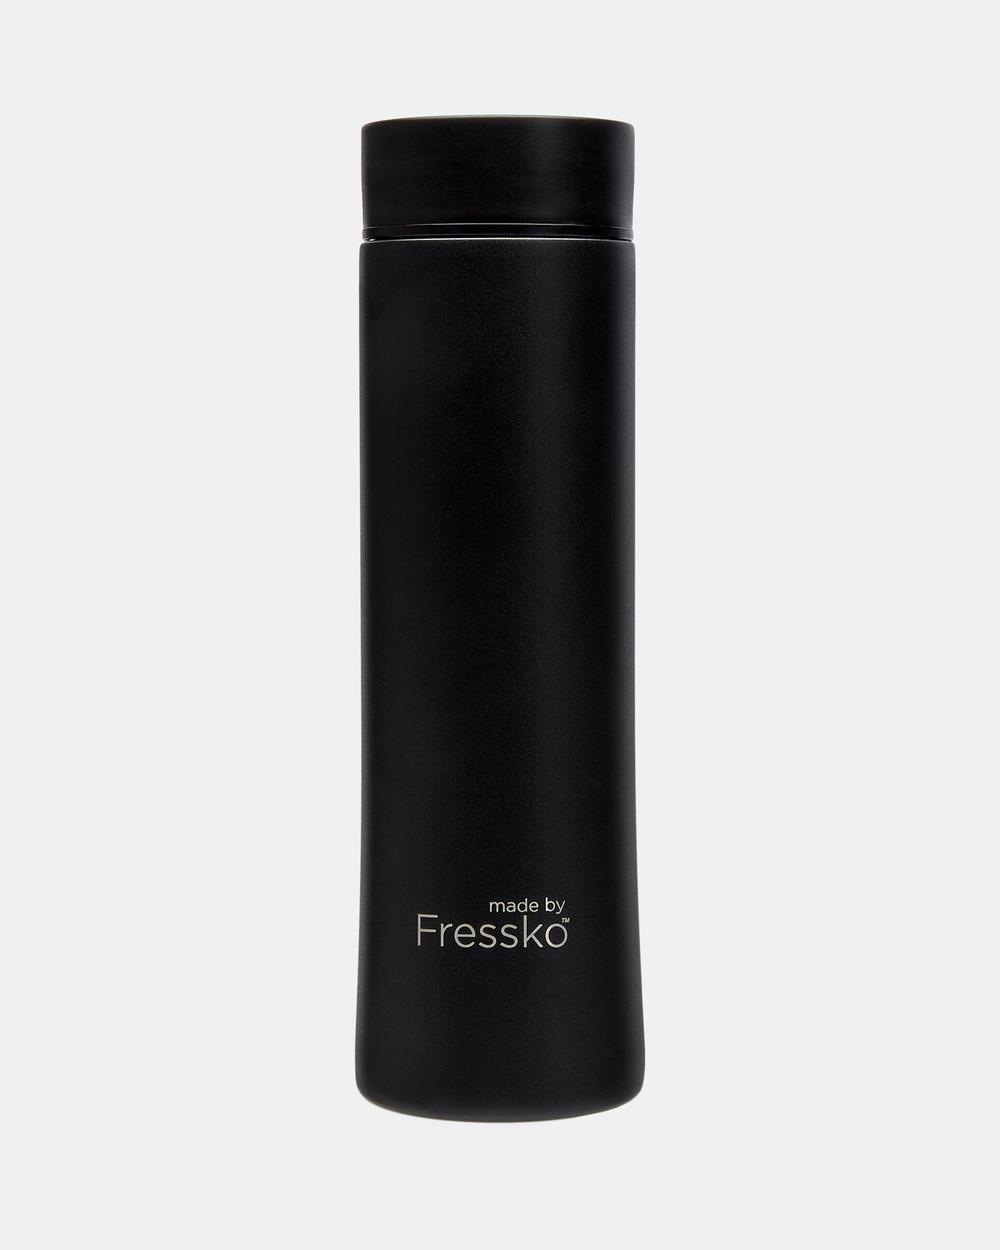 Fressko - MOVE 660ml Infuser Flask - Home (Black) MOVE 660ml Infuser Flask